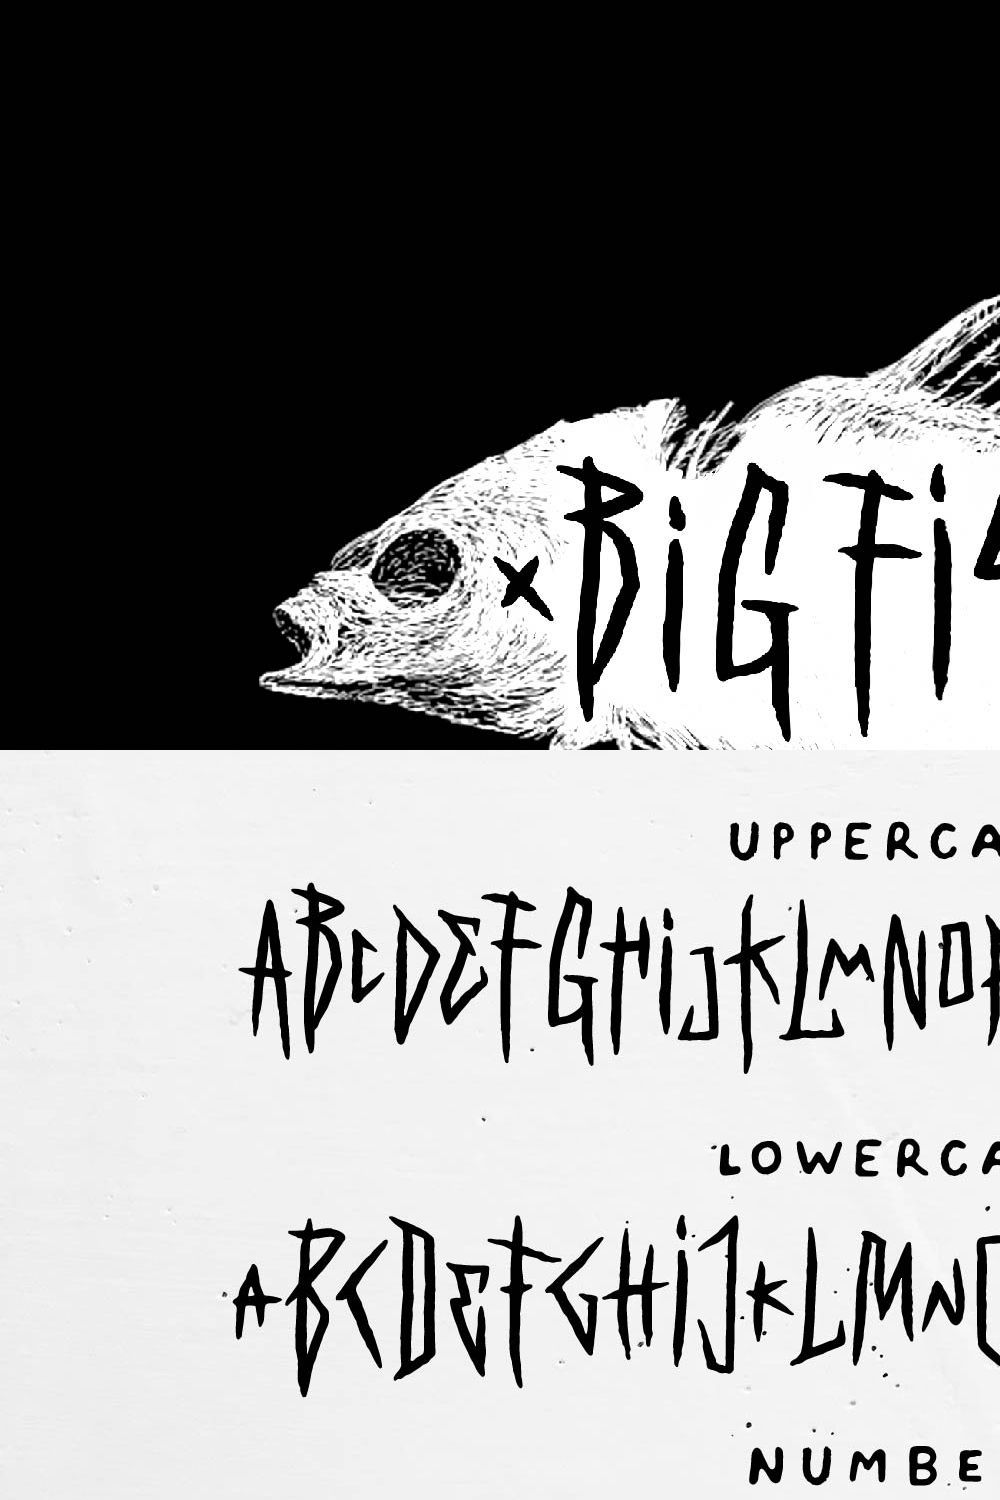 Big Fish DD - rock metal font pinterest preview image.